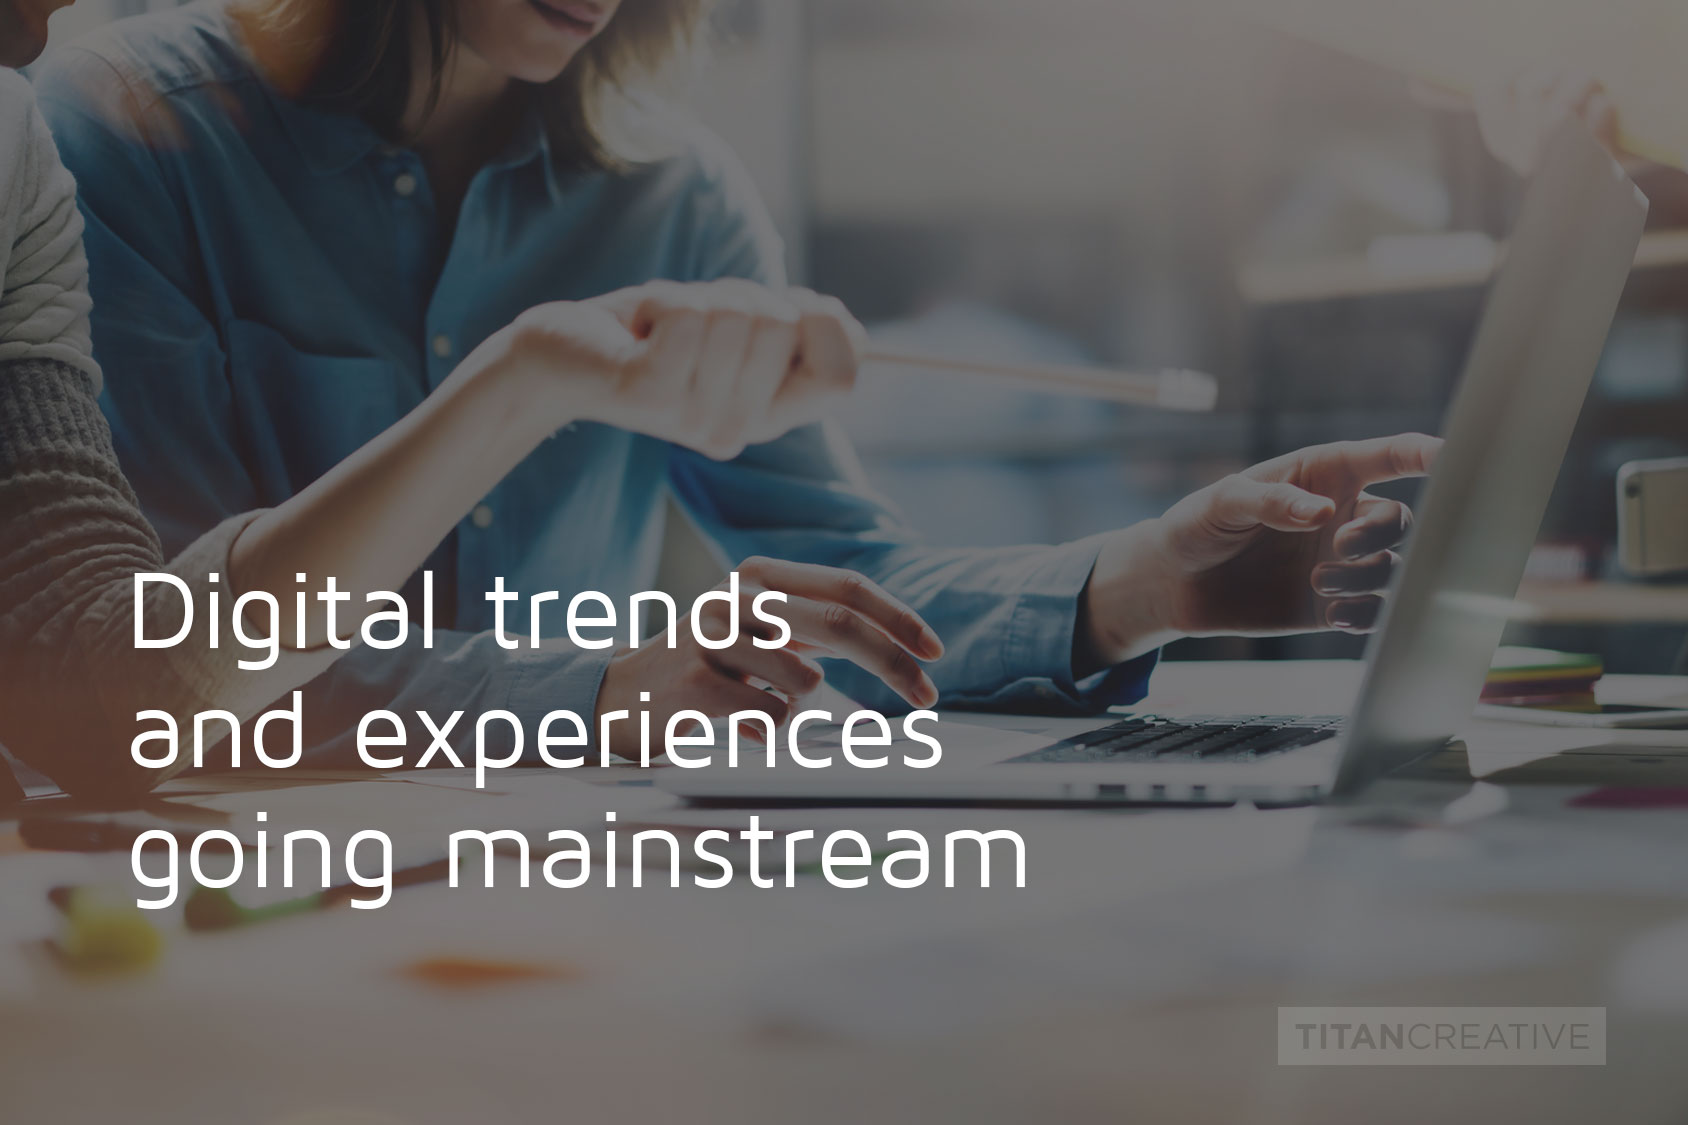 Digital experiences & trends going mainstream.